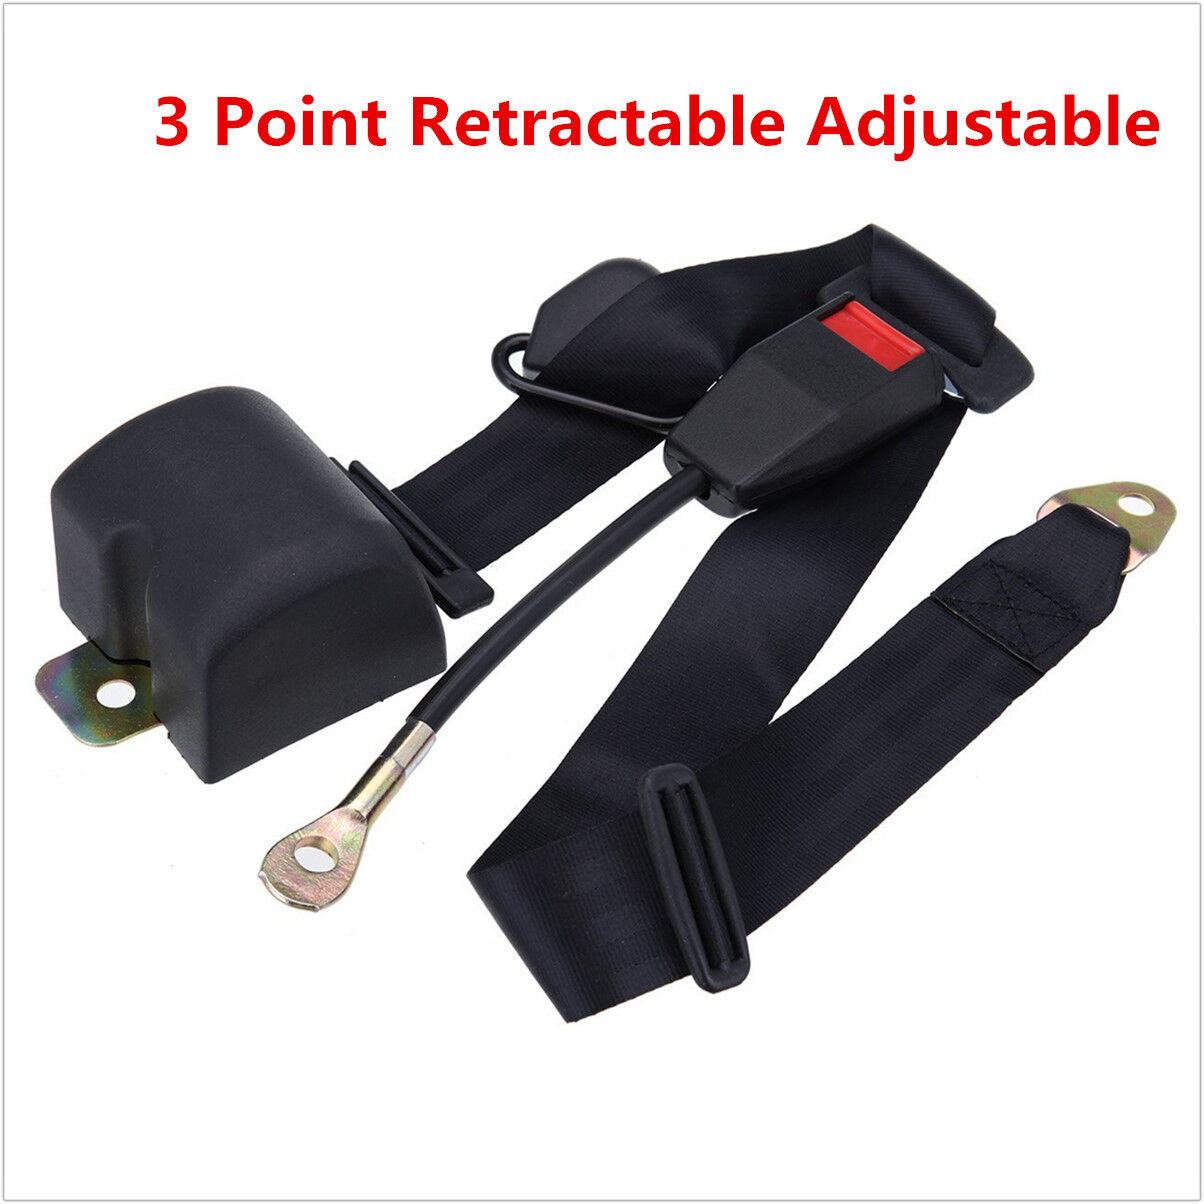 3 Point Retractable Adjustable Auto Car Universal Seat Lap Belt With 3 Bolt